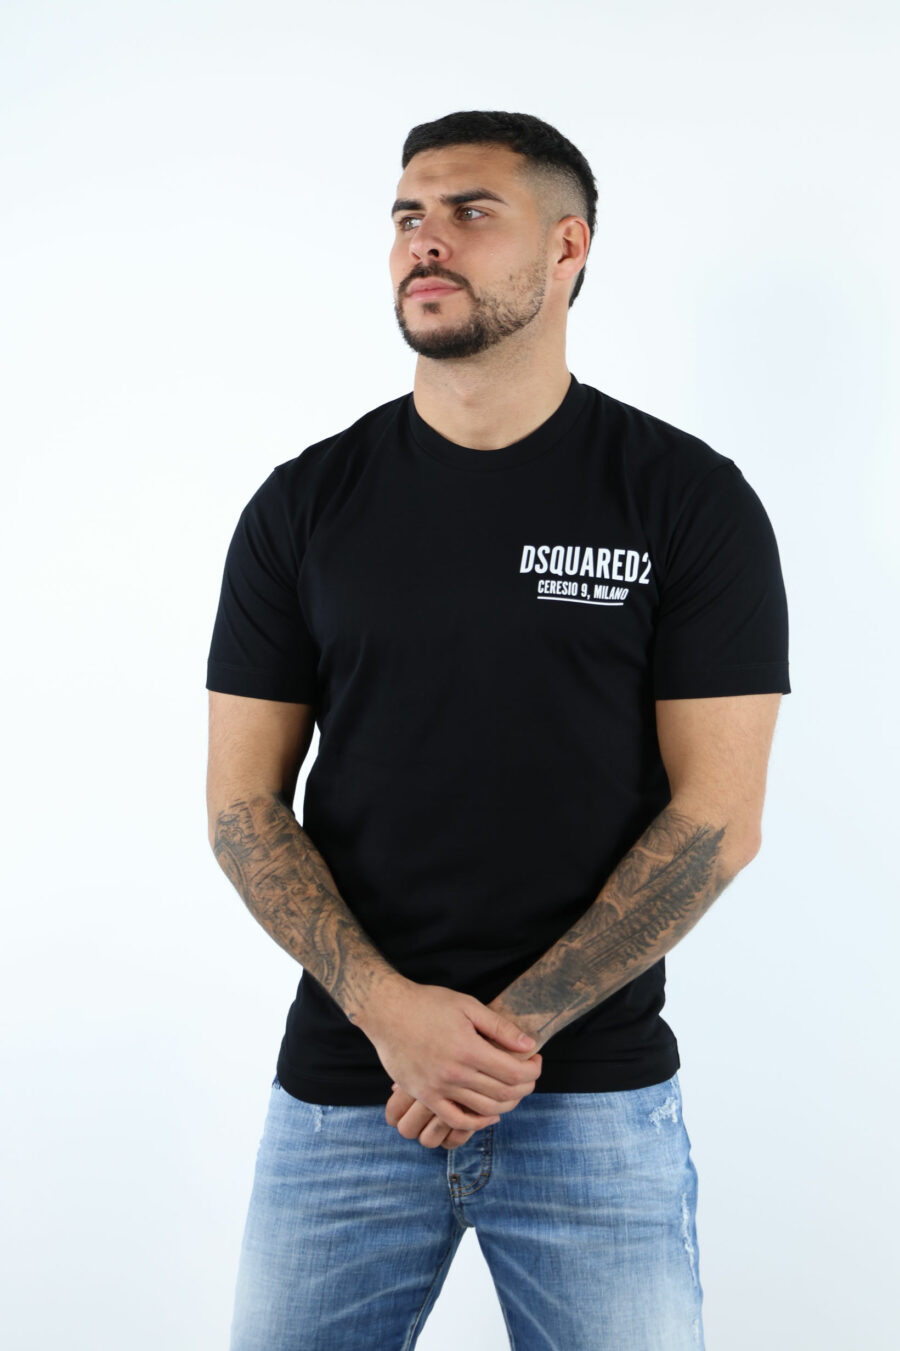 Camiseta negra con minilogo "ceresio 9, milano" - 106877